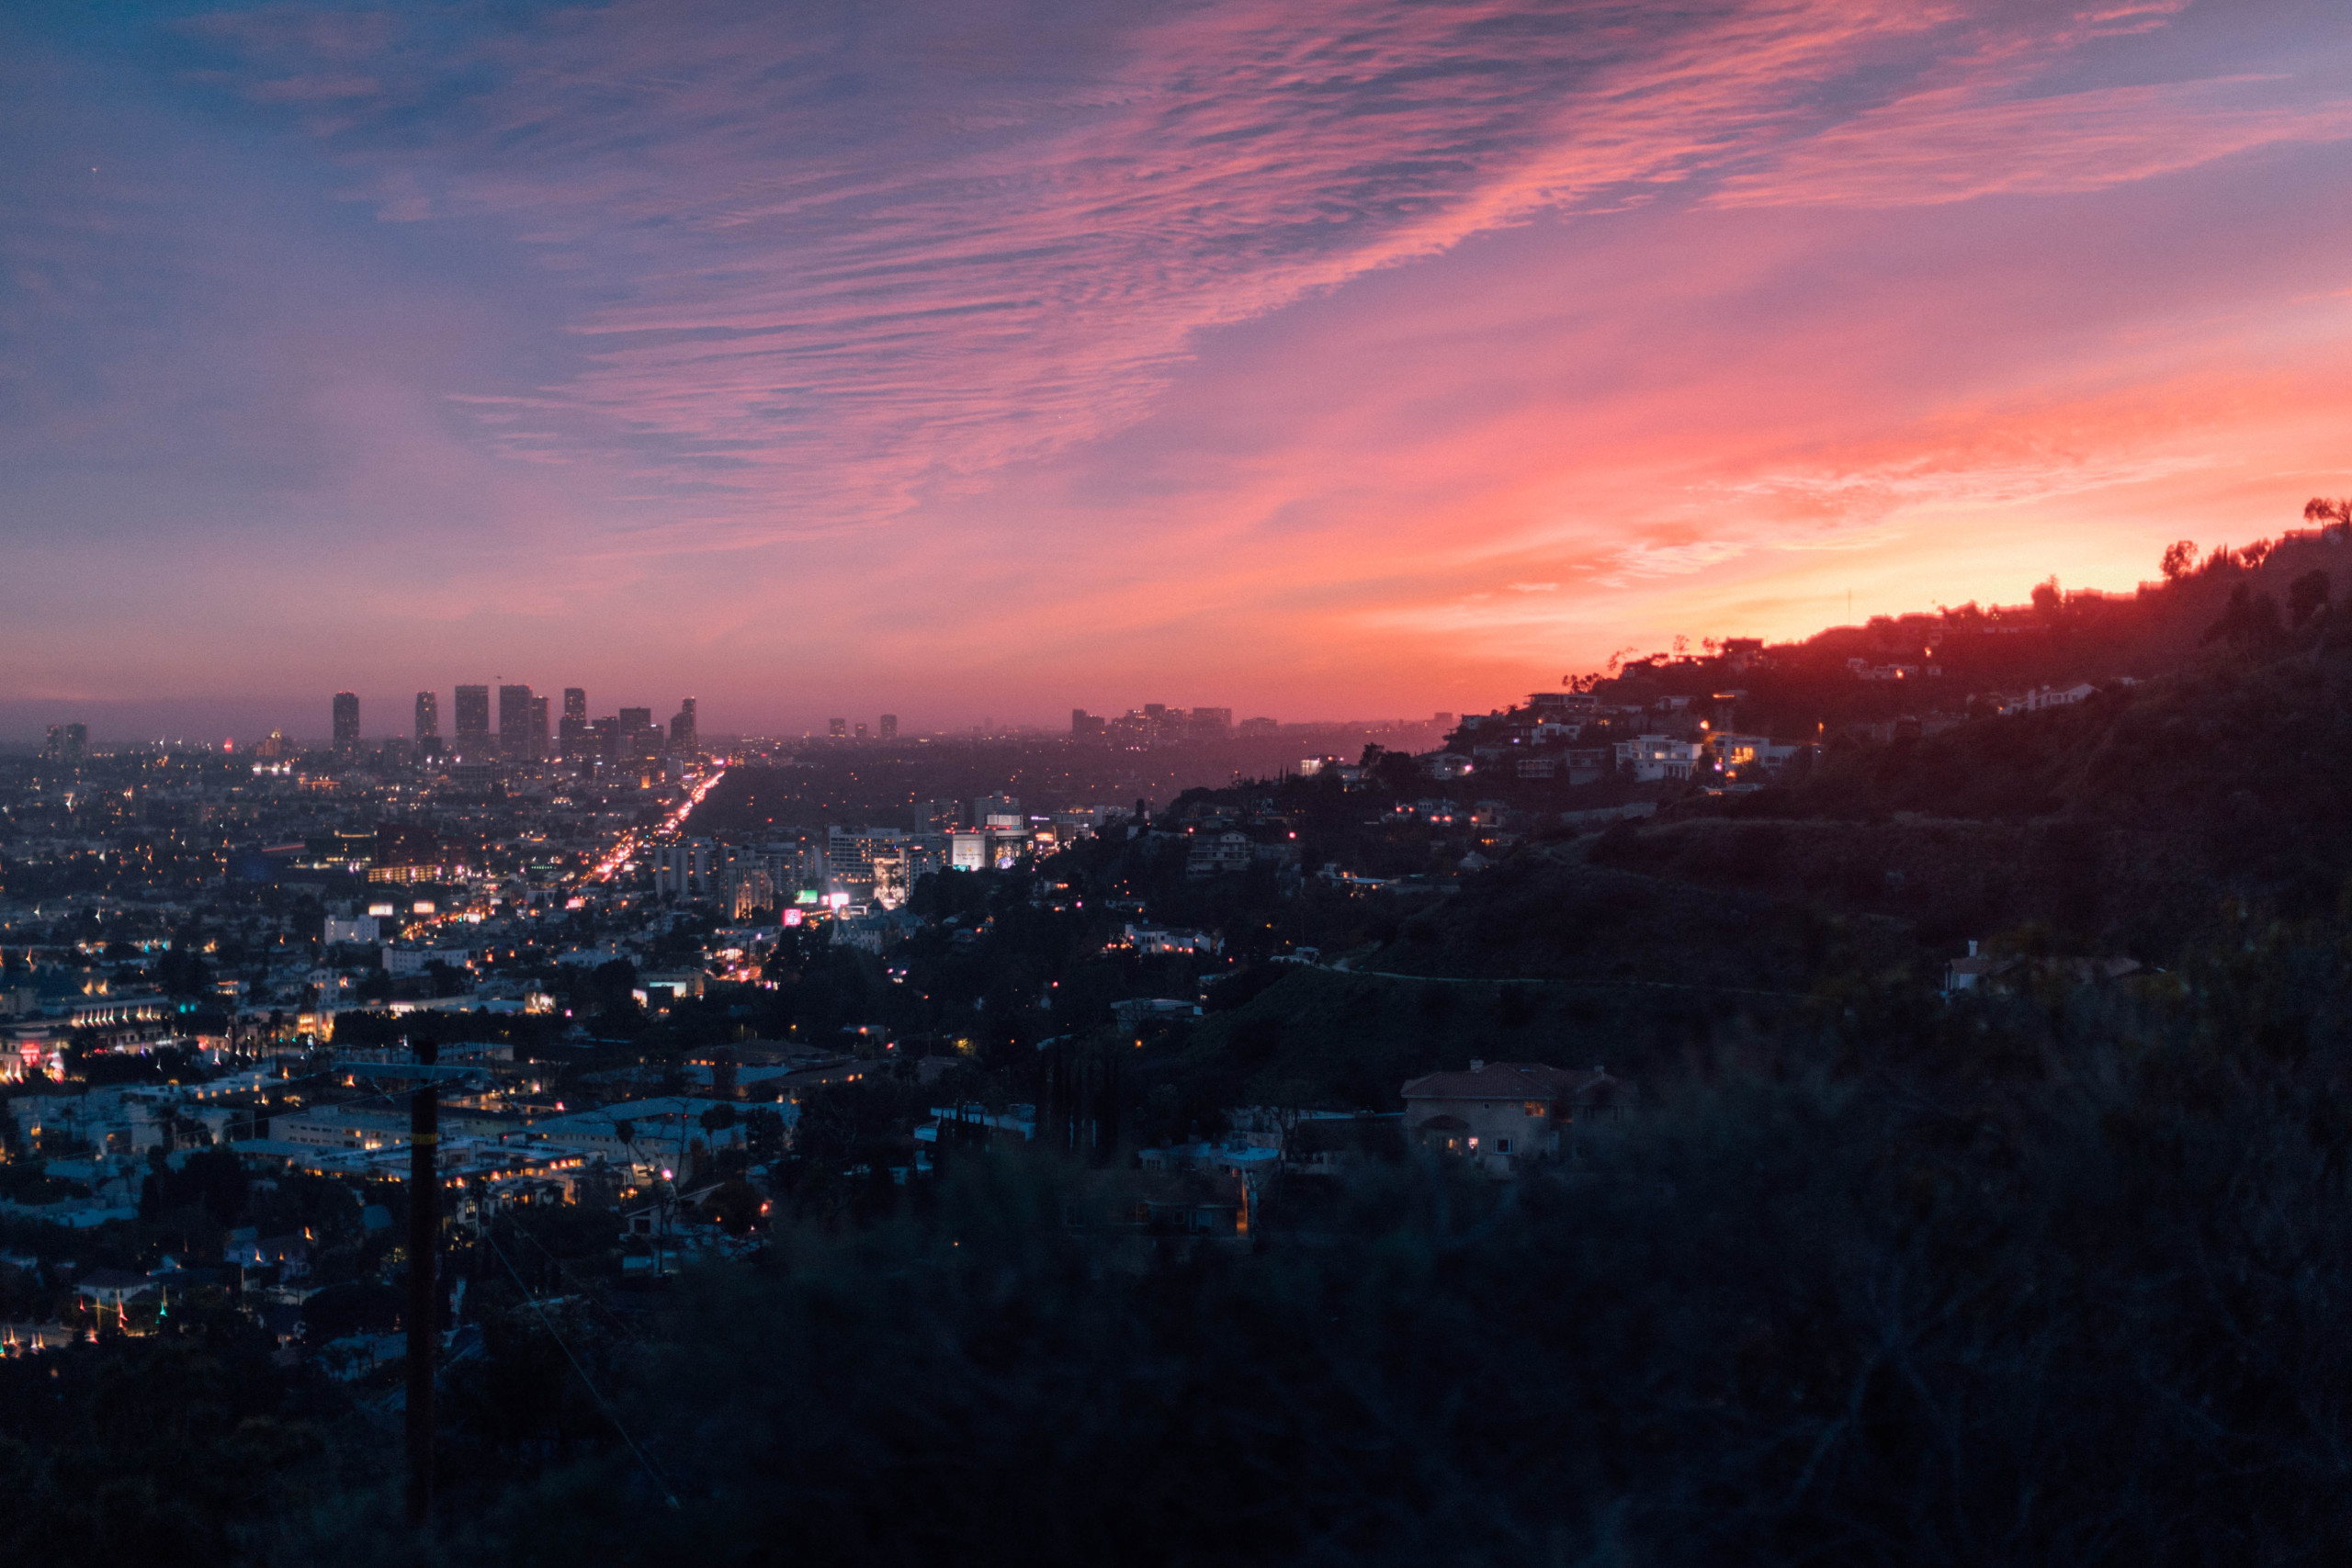 Sunset over LA's hills